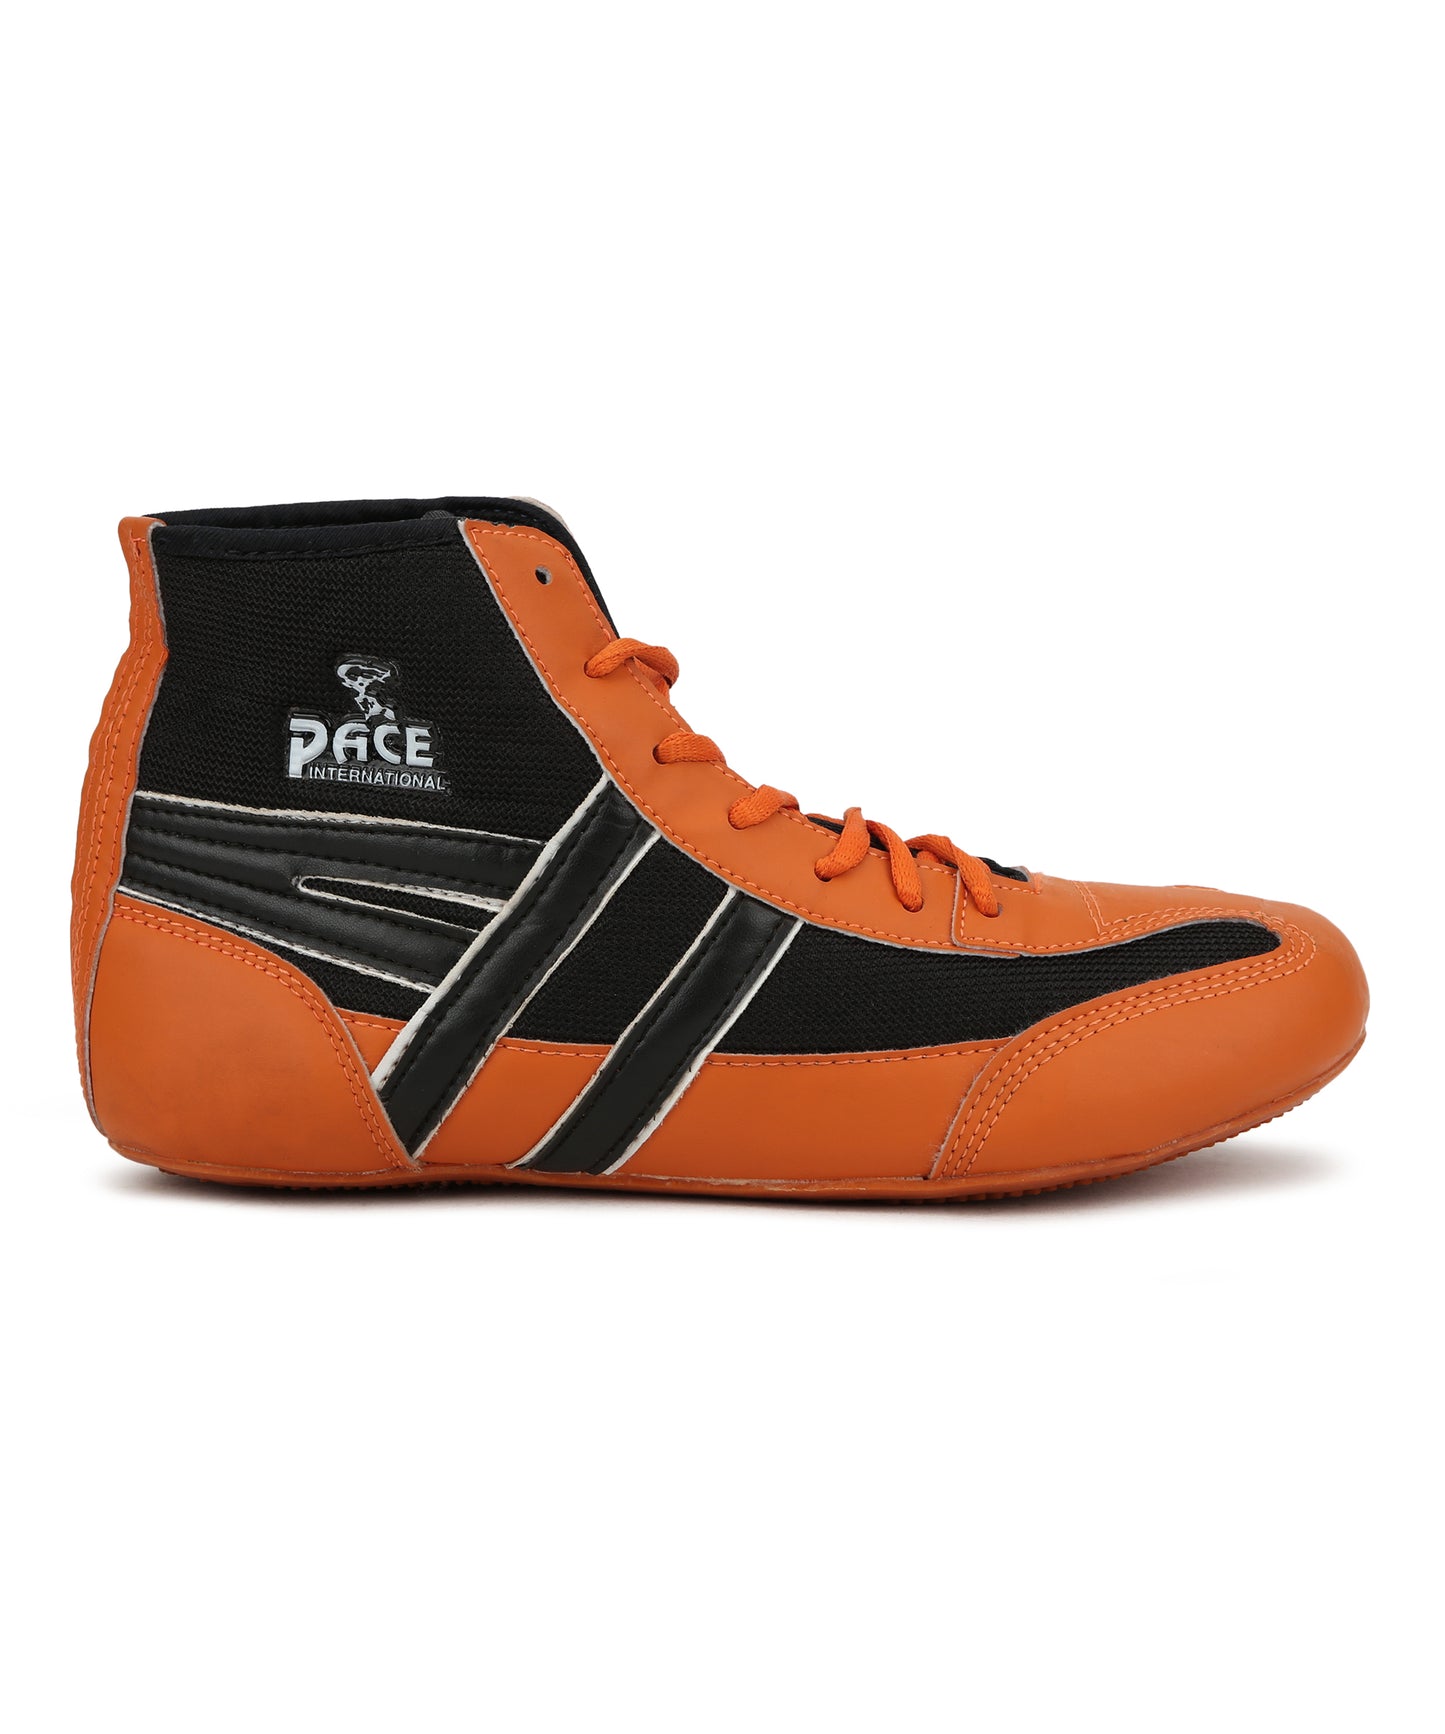 Pace International Kabaddi Shoes(Orange/ Black)